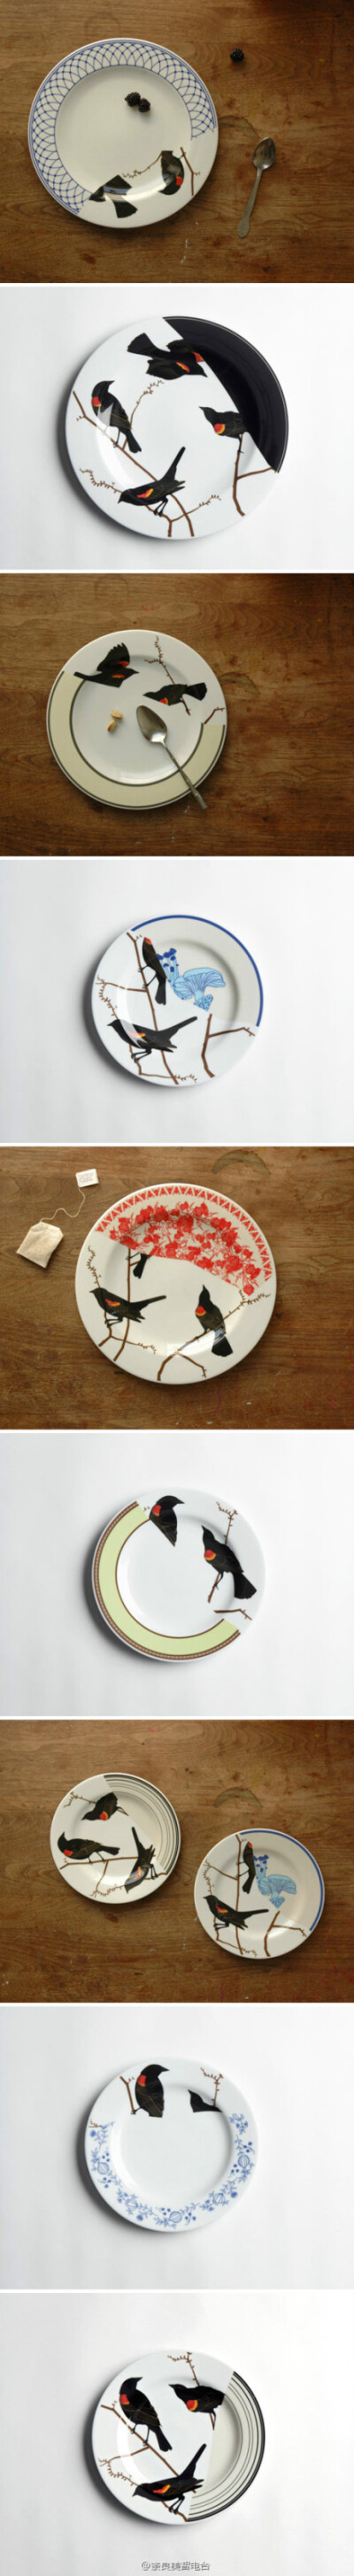 owl【盛美】美国Jason Miller工作室的瓷器作品“seconds”，尝试打破餐具图案设计的陈规。引用设计者自己的陈述:&quot;Conventions are for suckers.&quot;谁来给个好点儿的翻译？